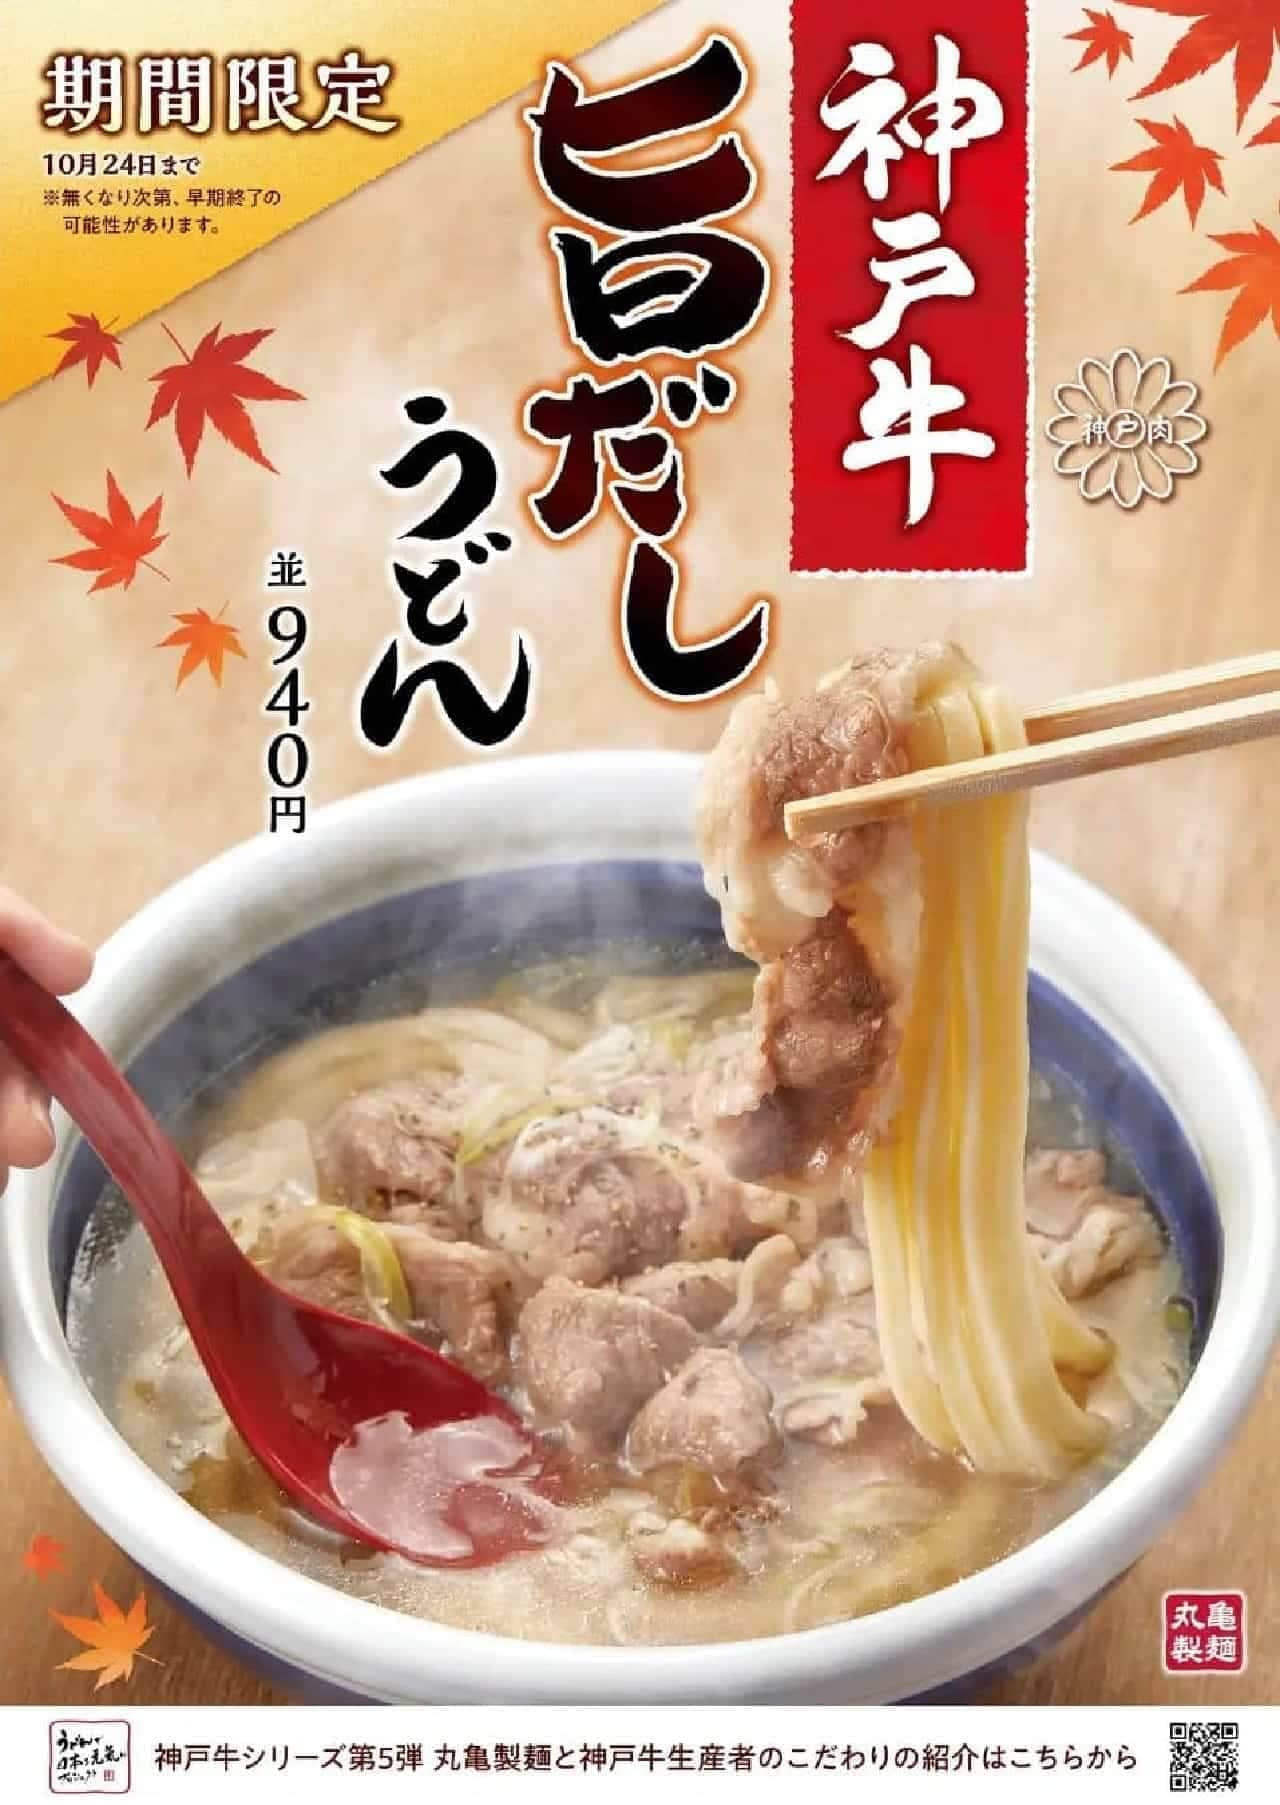 Marugame Seimen "Kobe Beef Udon Noodle with Delicious Dashi